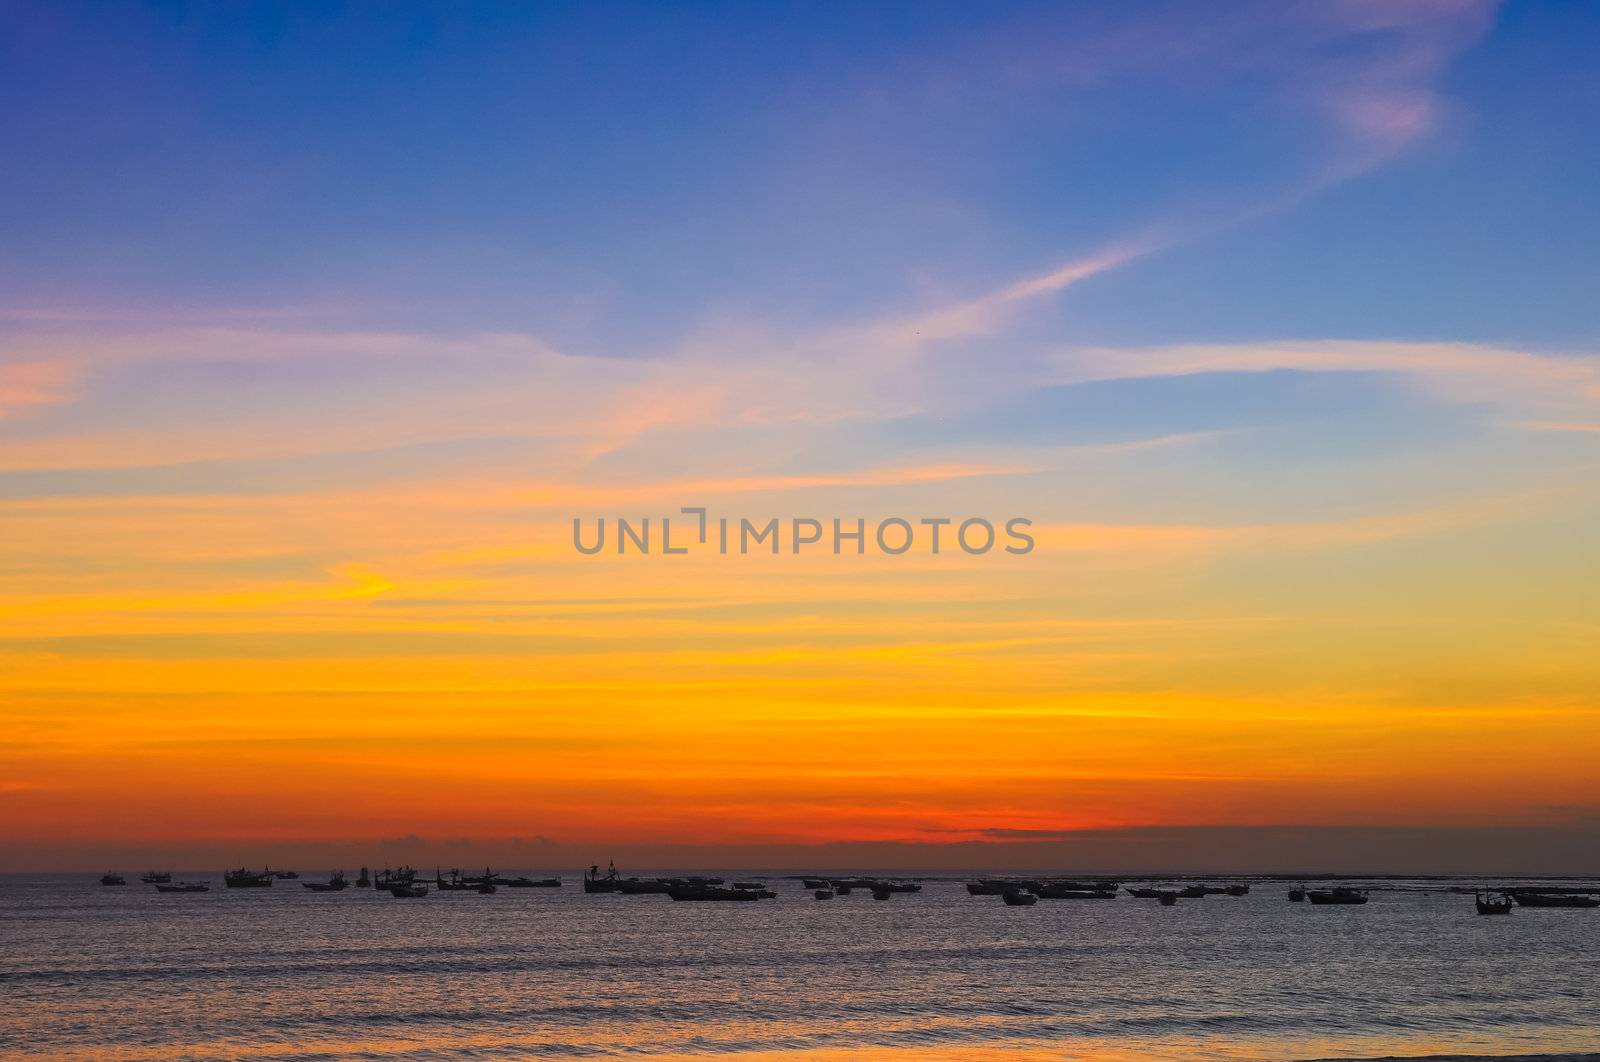 Ocean coast sunset and fishing boats, Bali, Indonesia